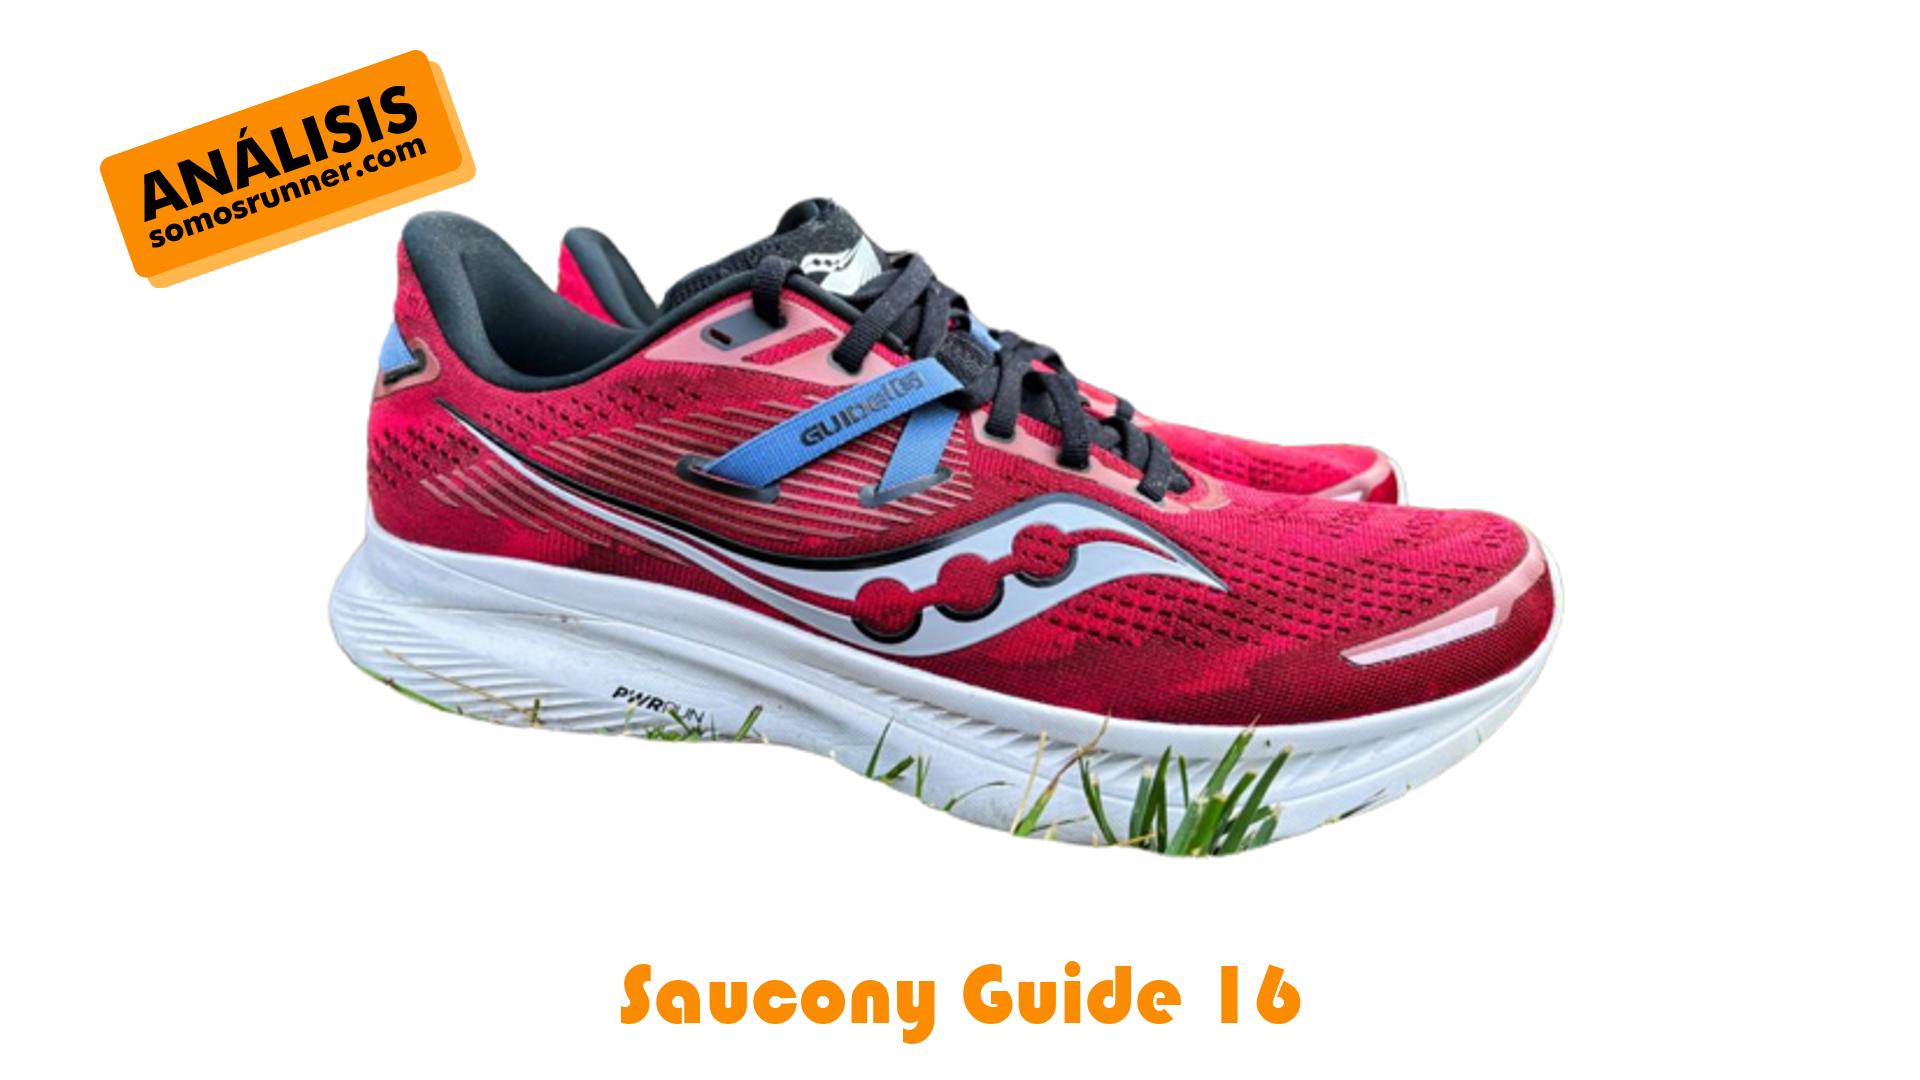 Saucony-Guide-16